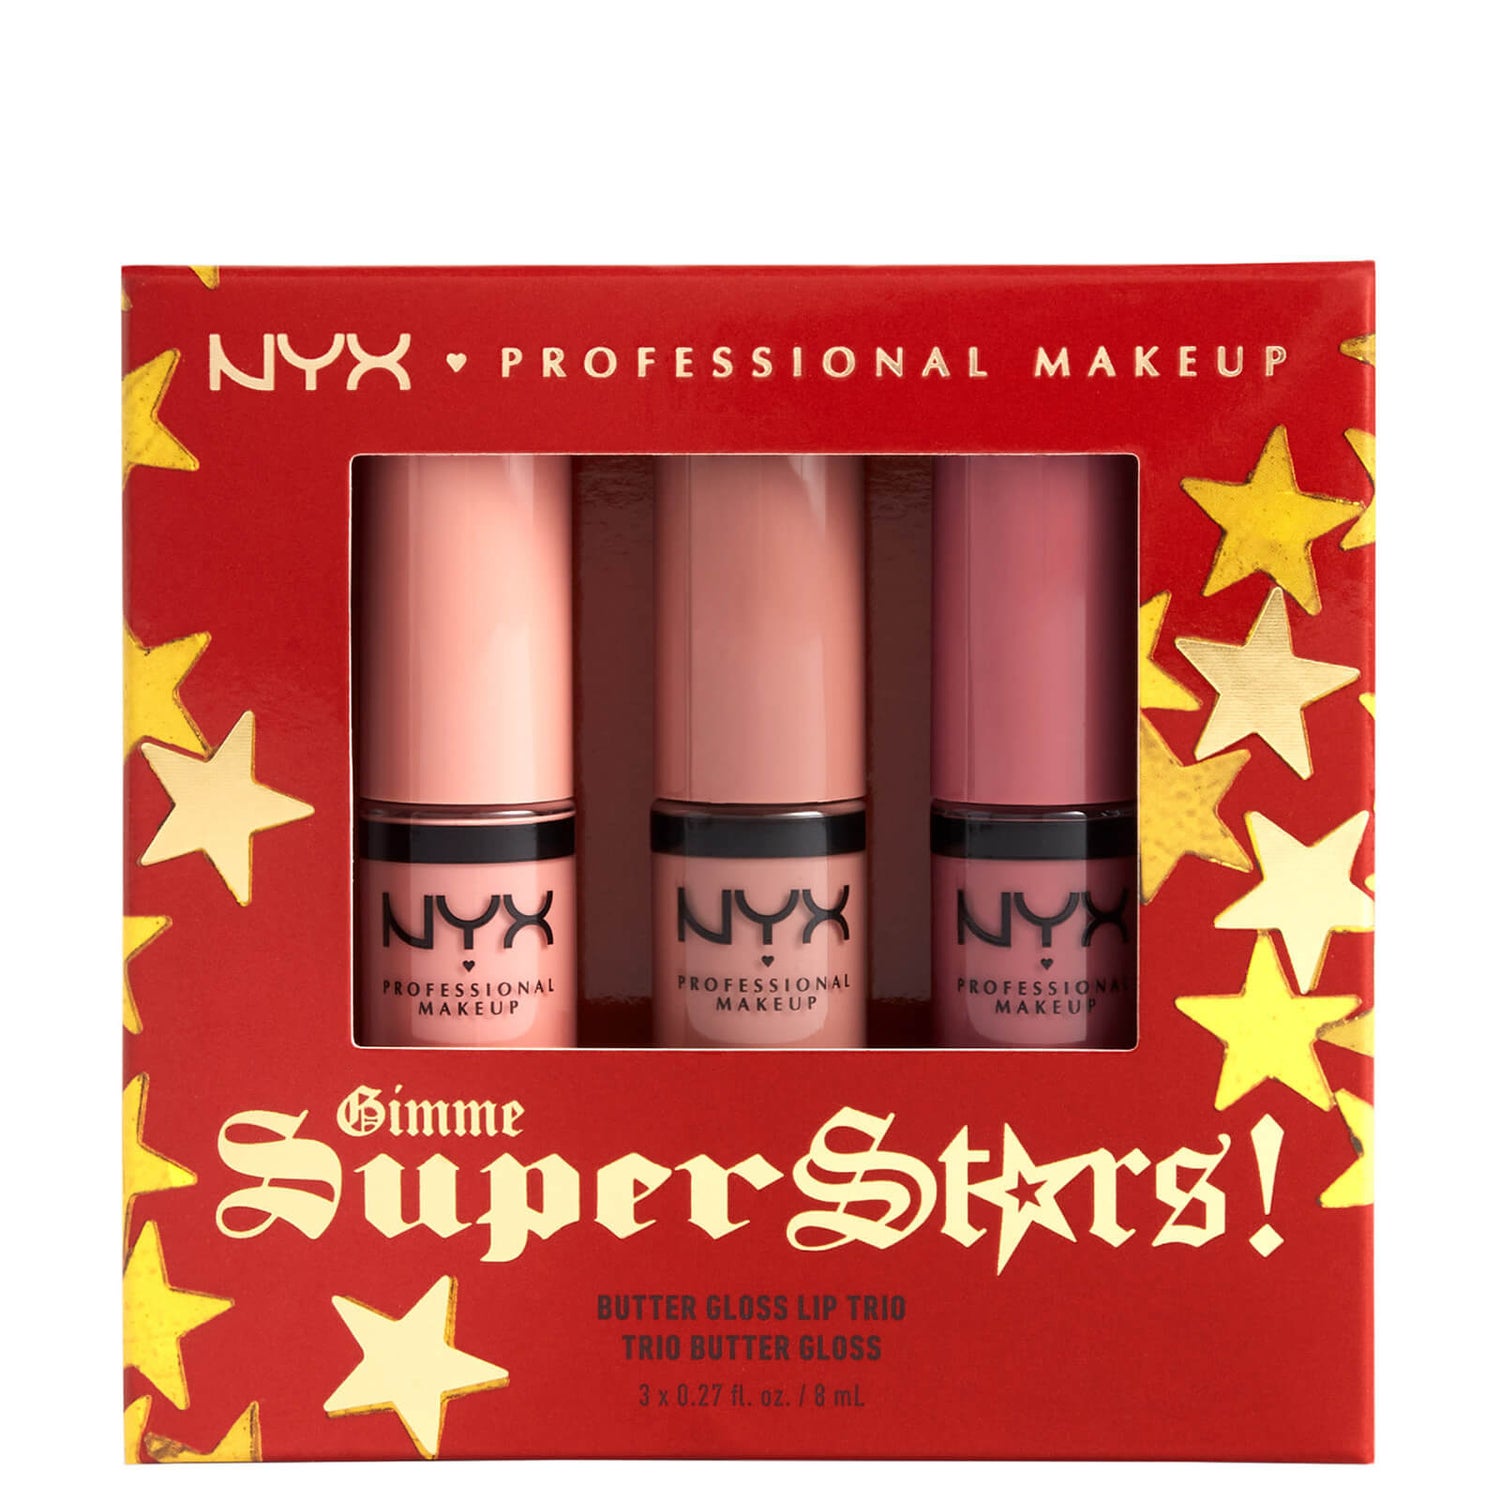 NYX Professional Makeup Gimme Super Stars! Set de regalo Butter Gloss Lip Trio Light Nude